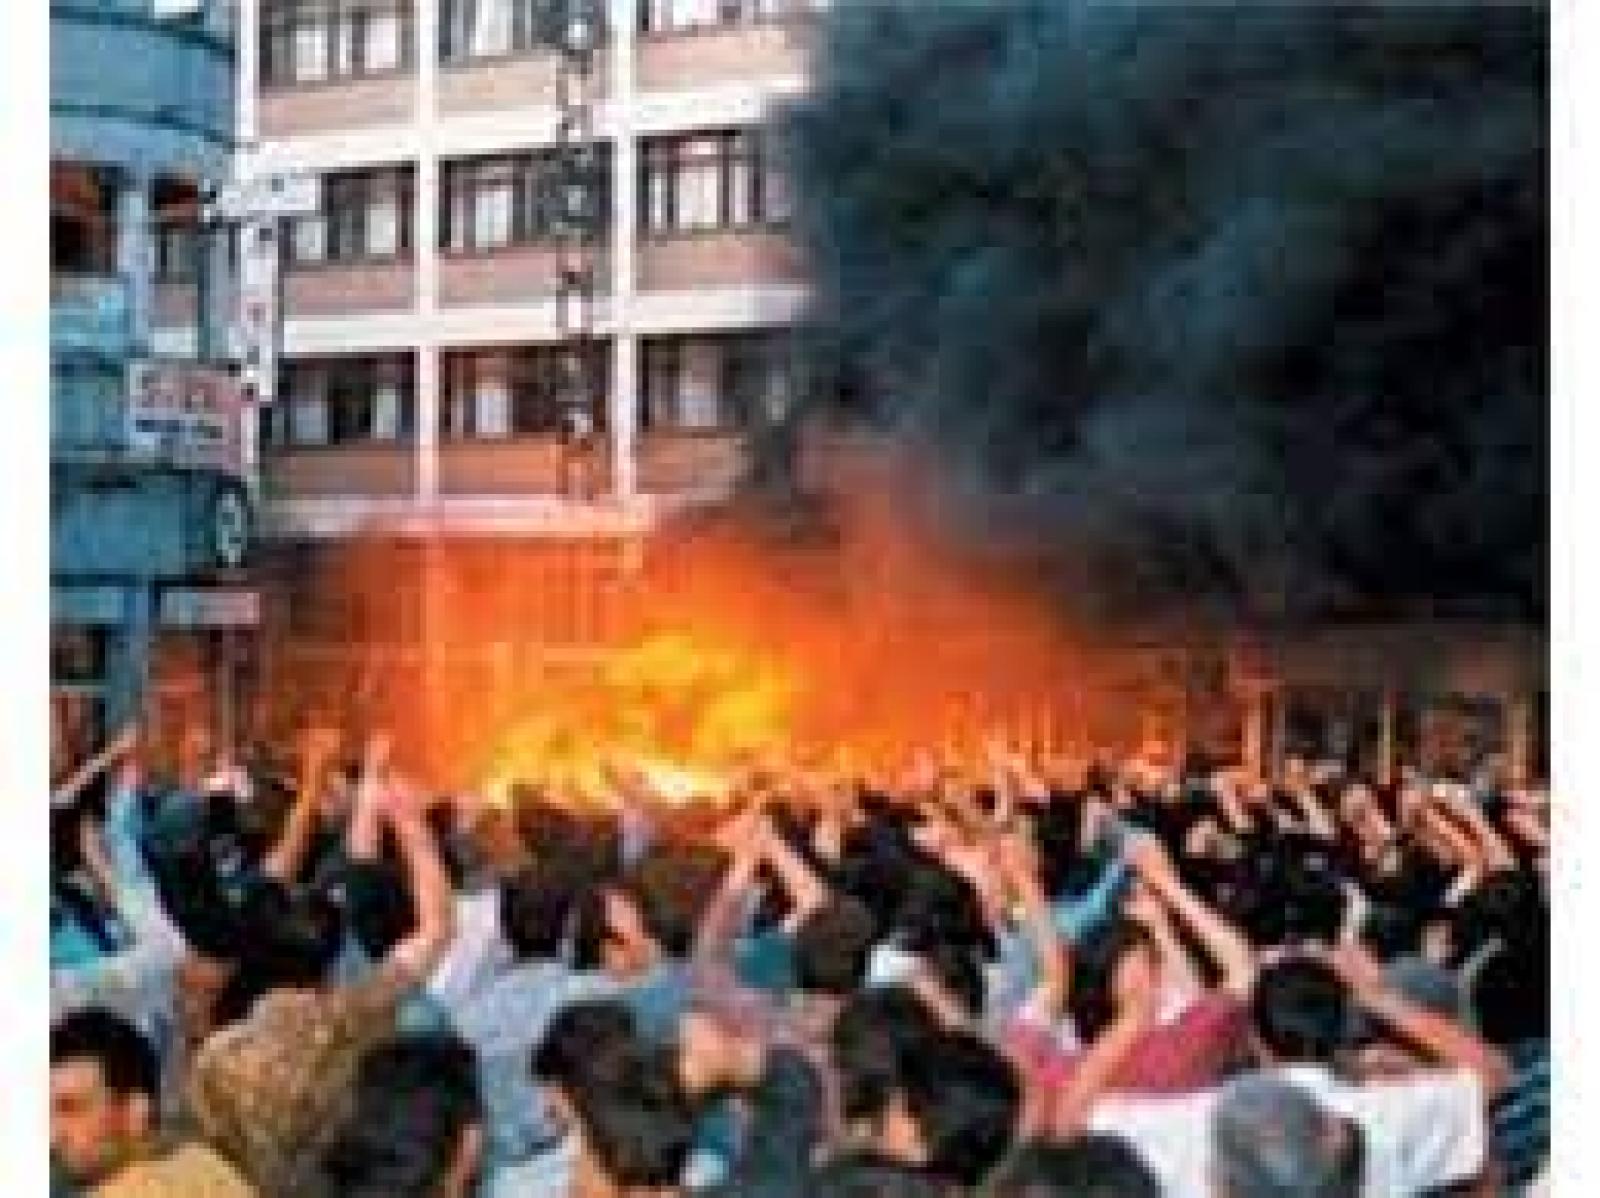 Sivas Massacre, Madımak Hotel, 2 July 1993, Sivas- Video of the protests and arson, İhlas Press Agency